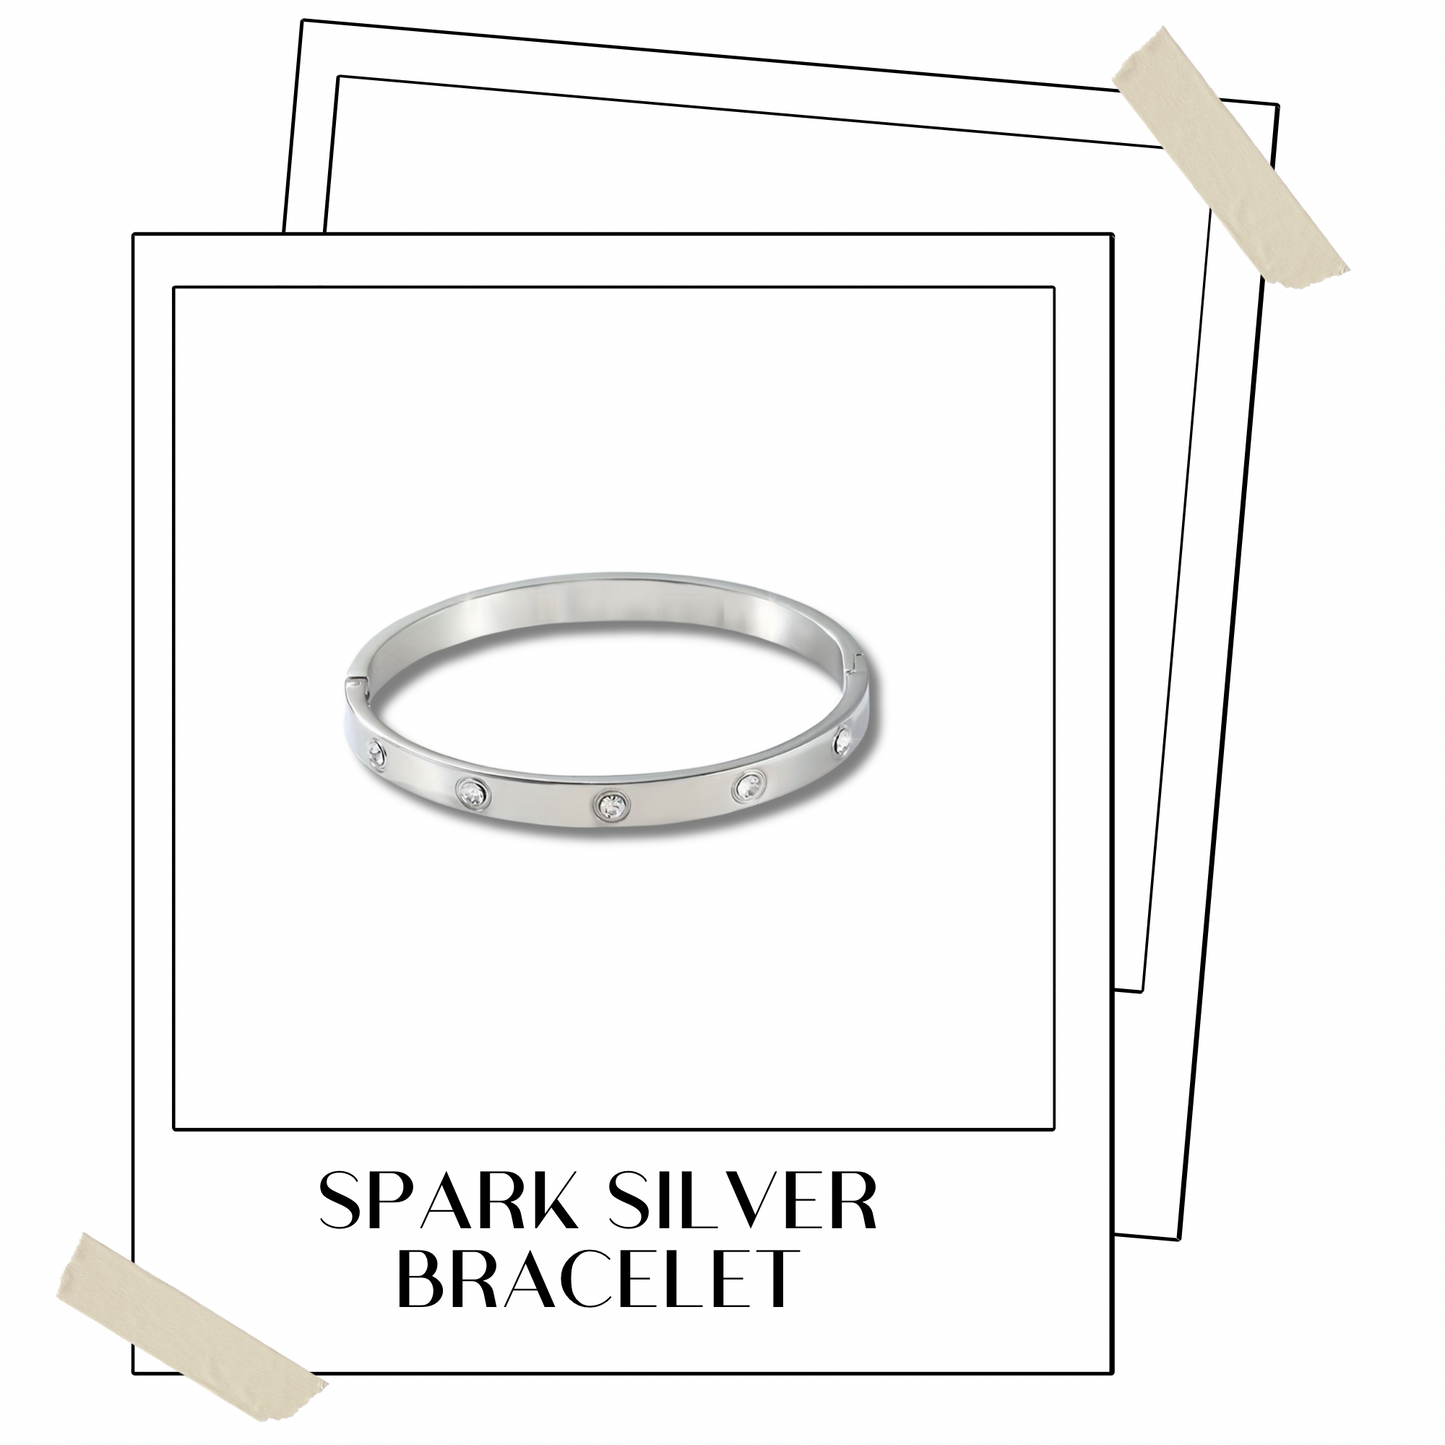 Spark silver bracelet